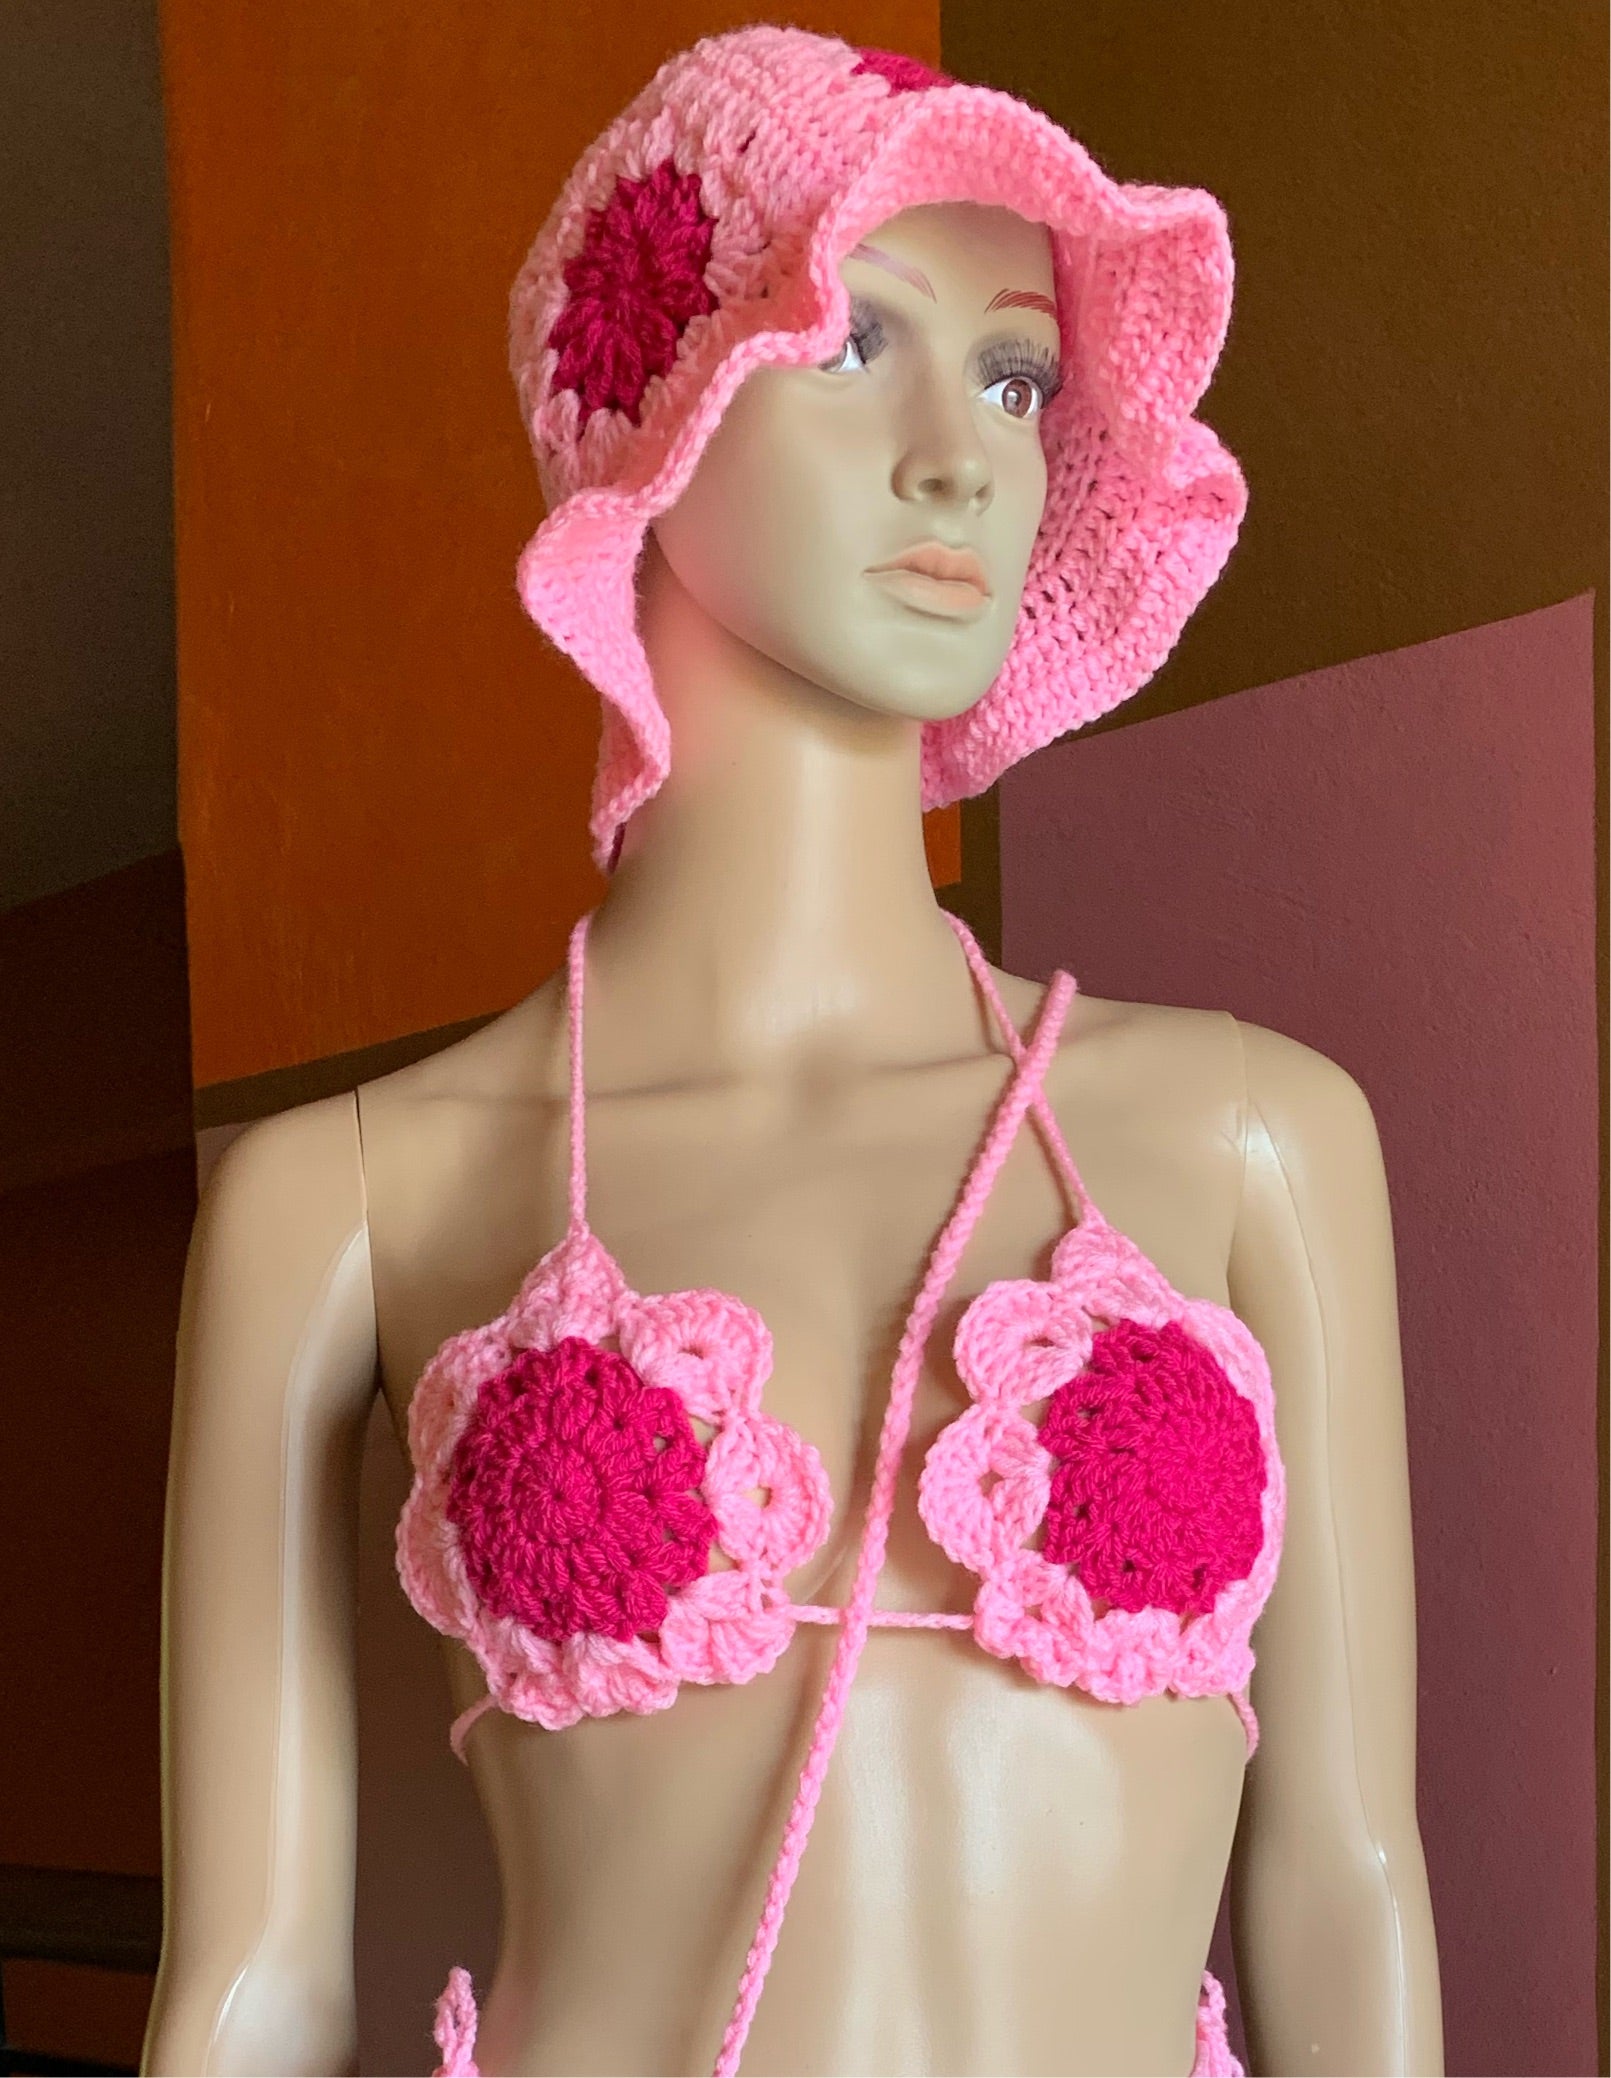 The Flower Crochet Top – WildxDandi